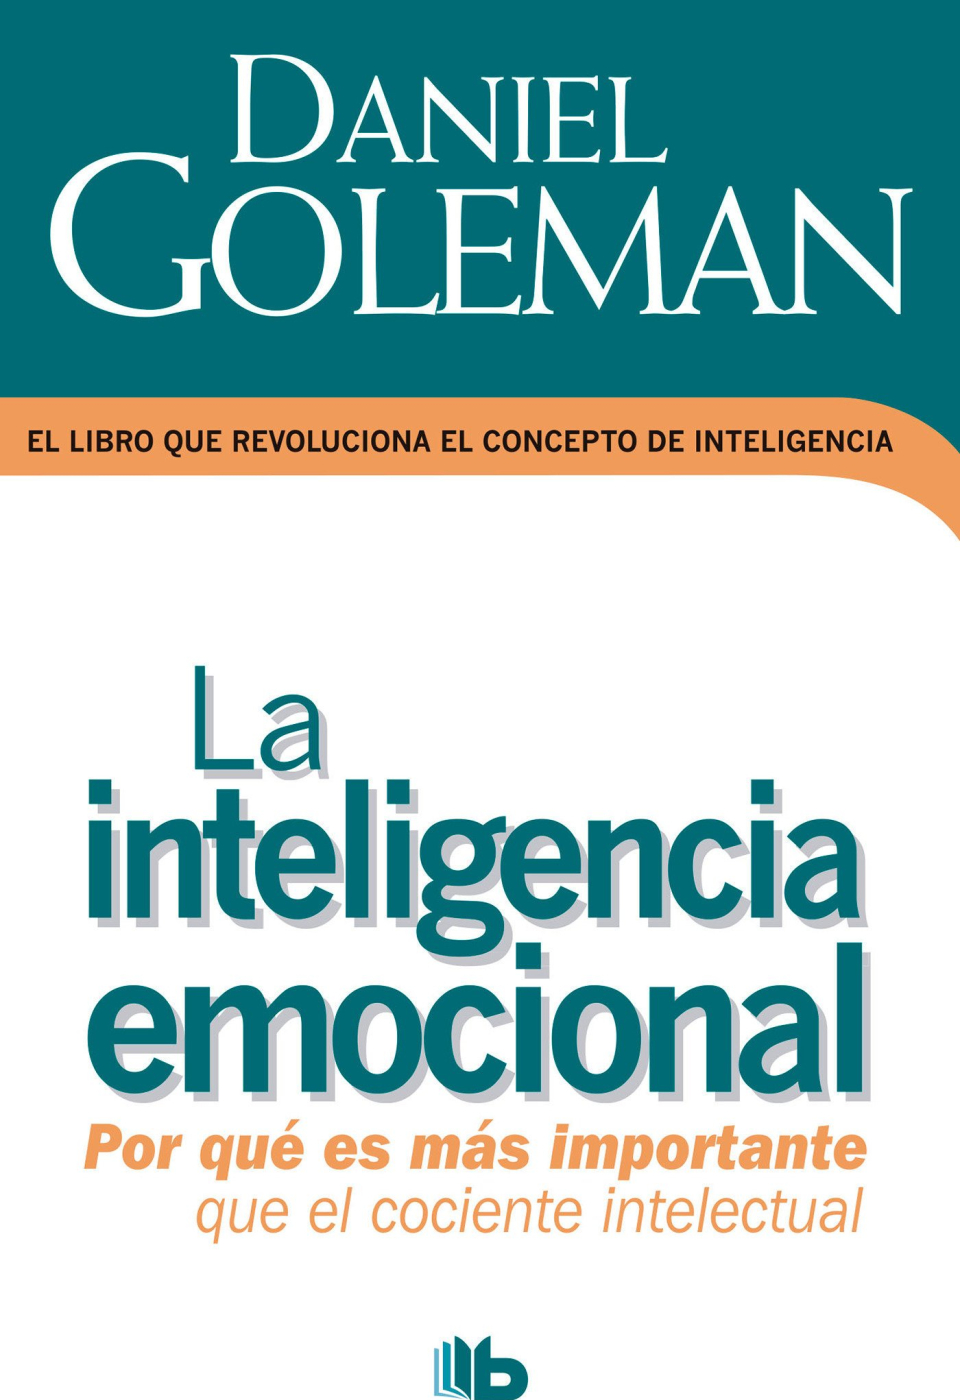 Libro: “Inteligencia Emocional”